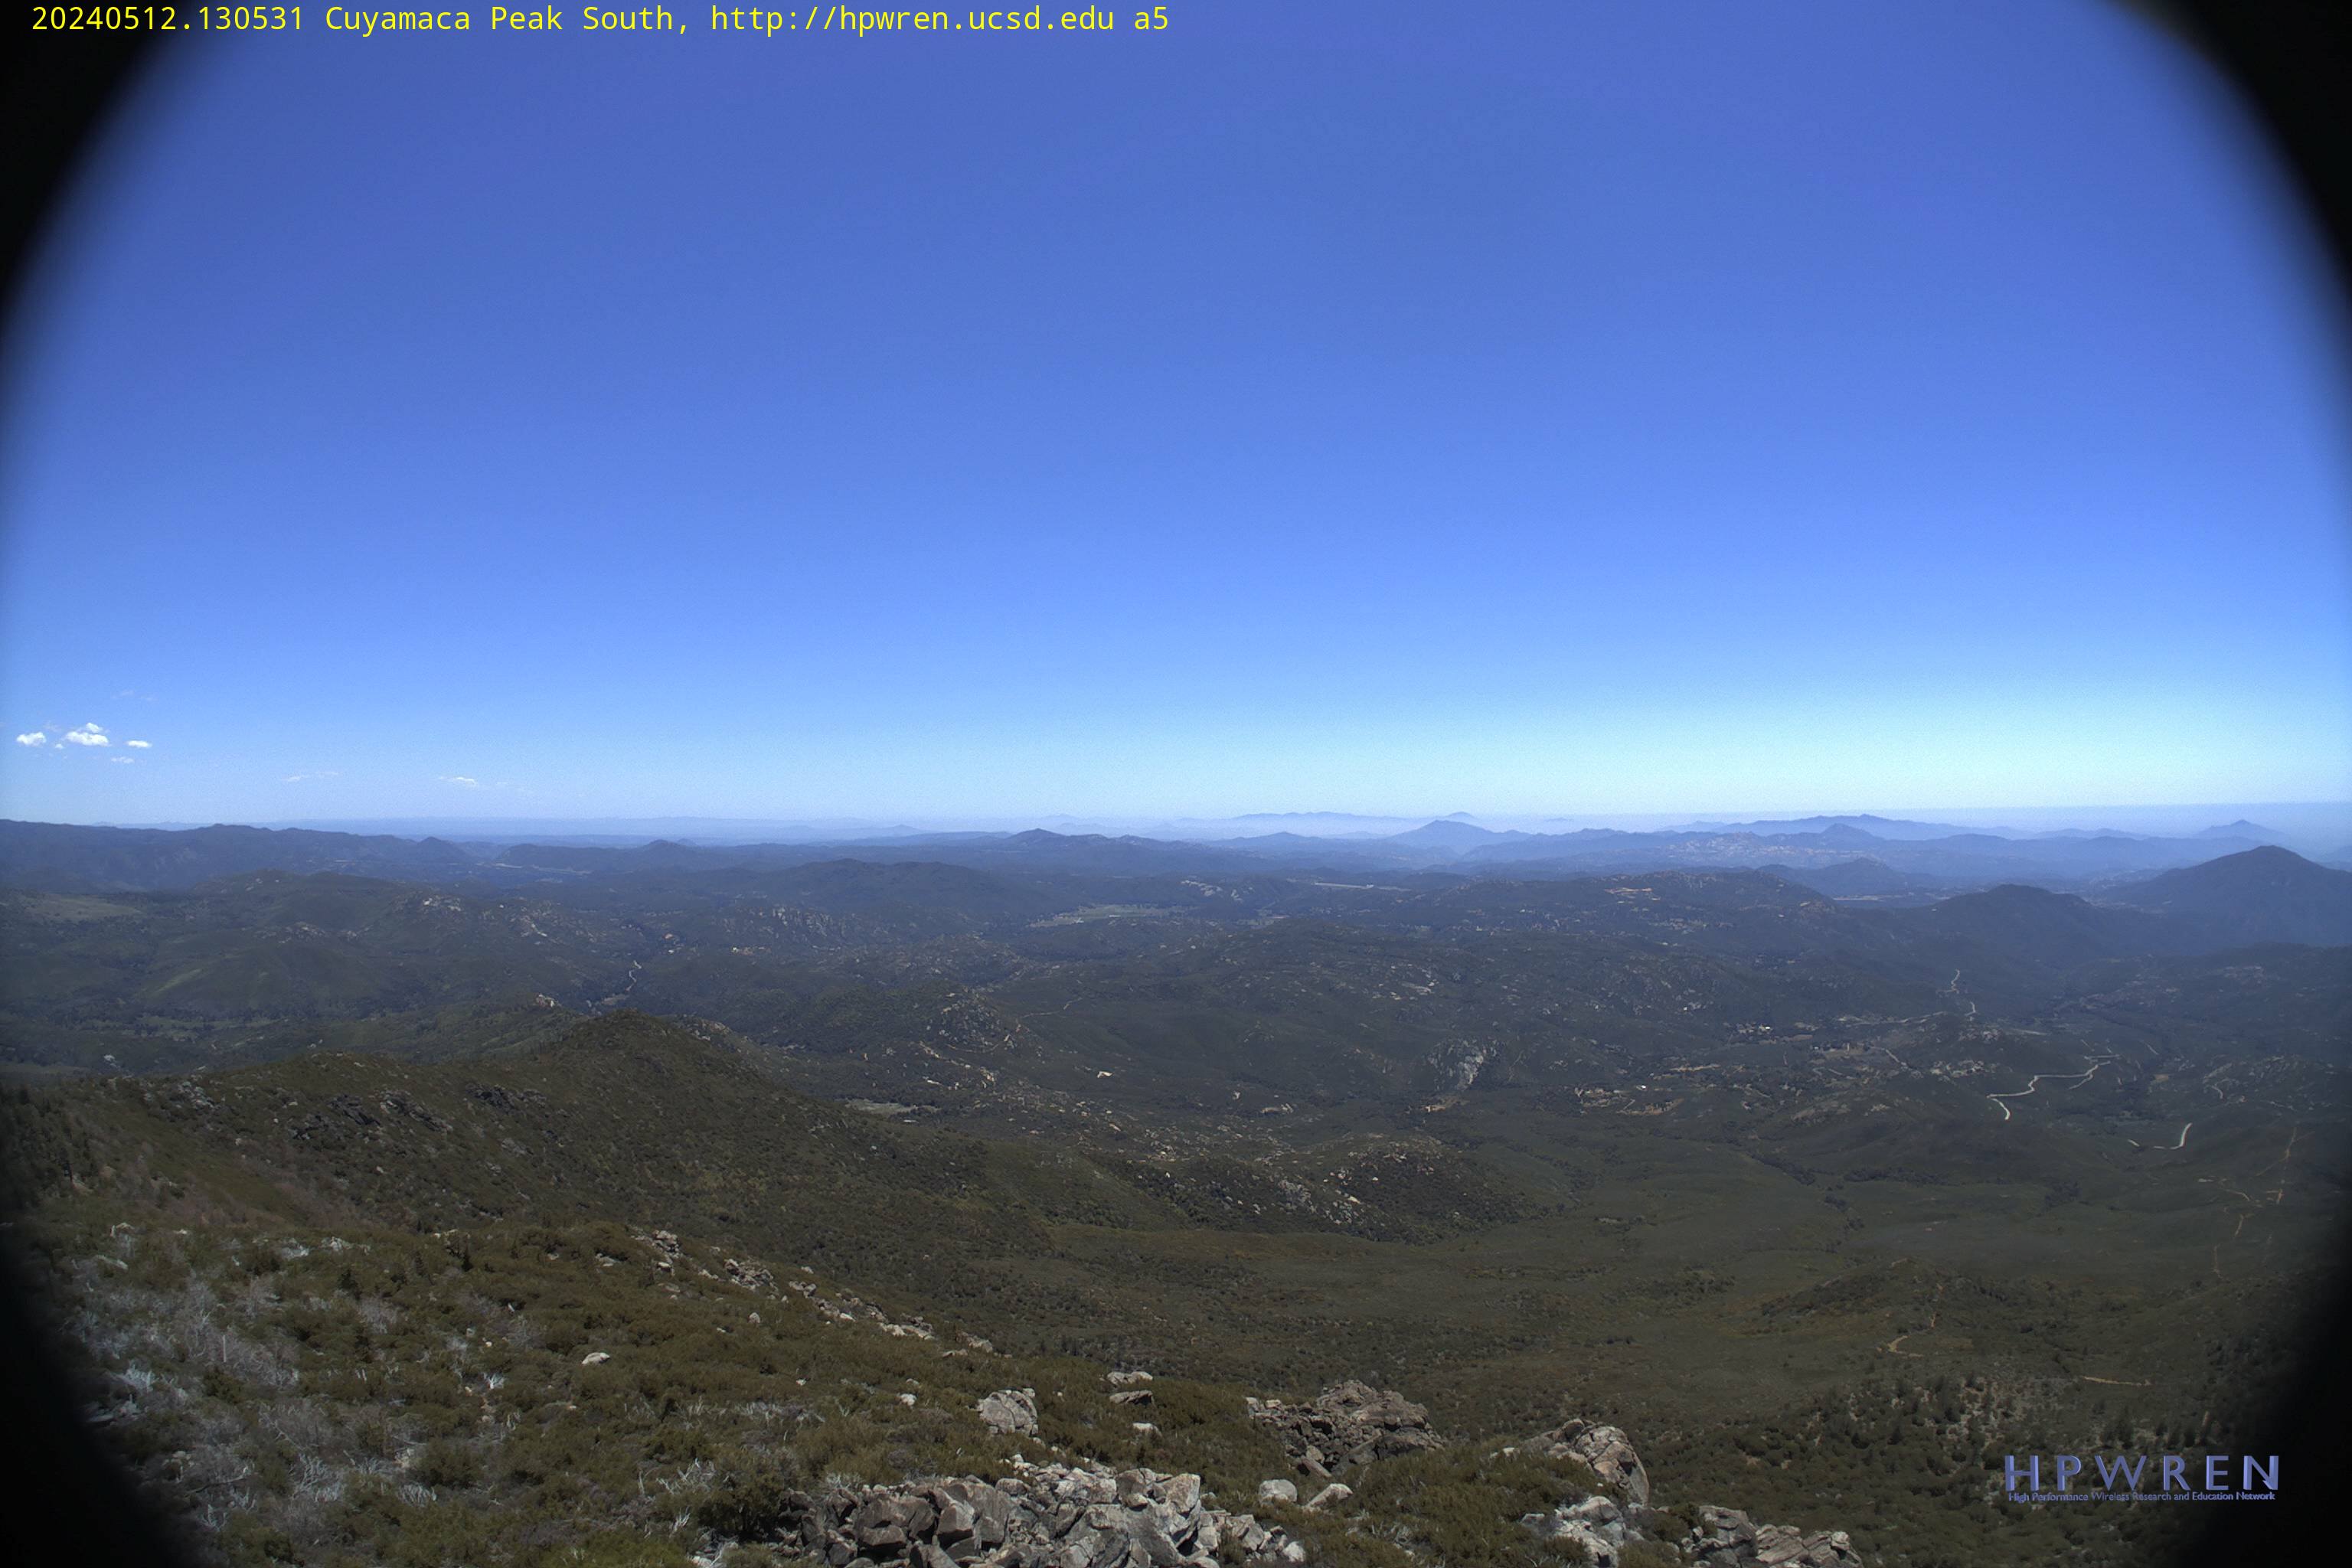 USA San Diego Panoramic view from Cuyamaca Peak live camera